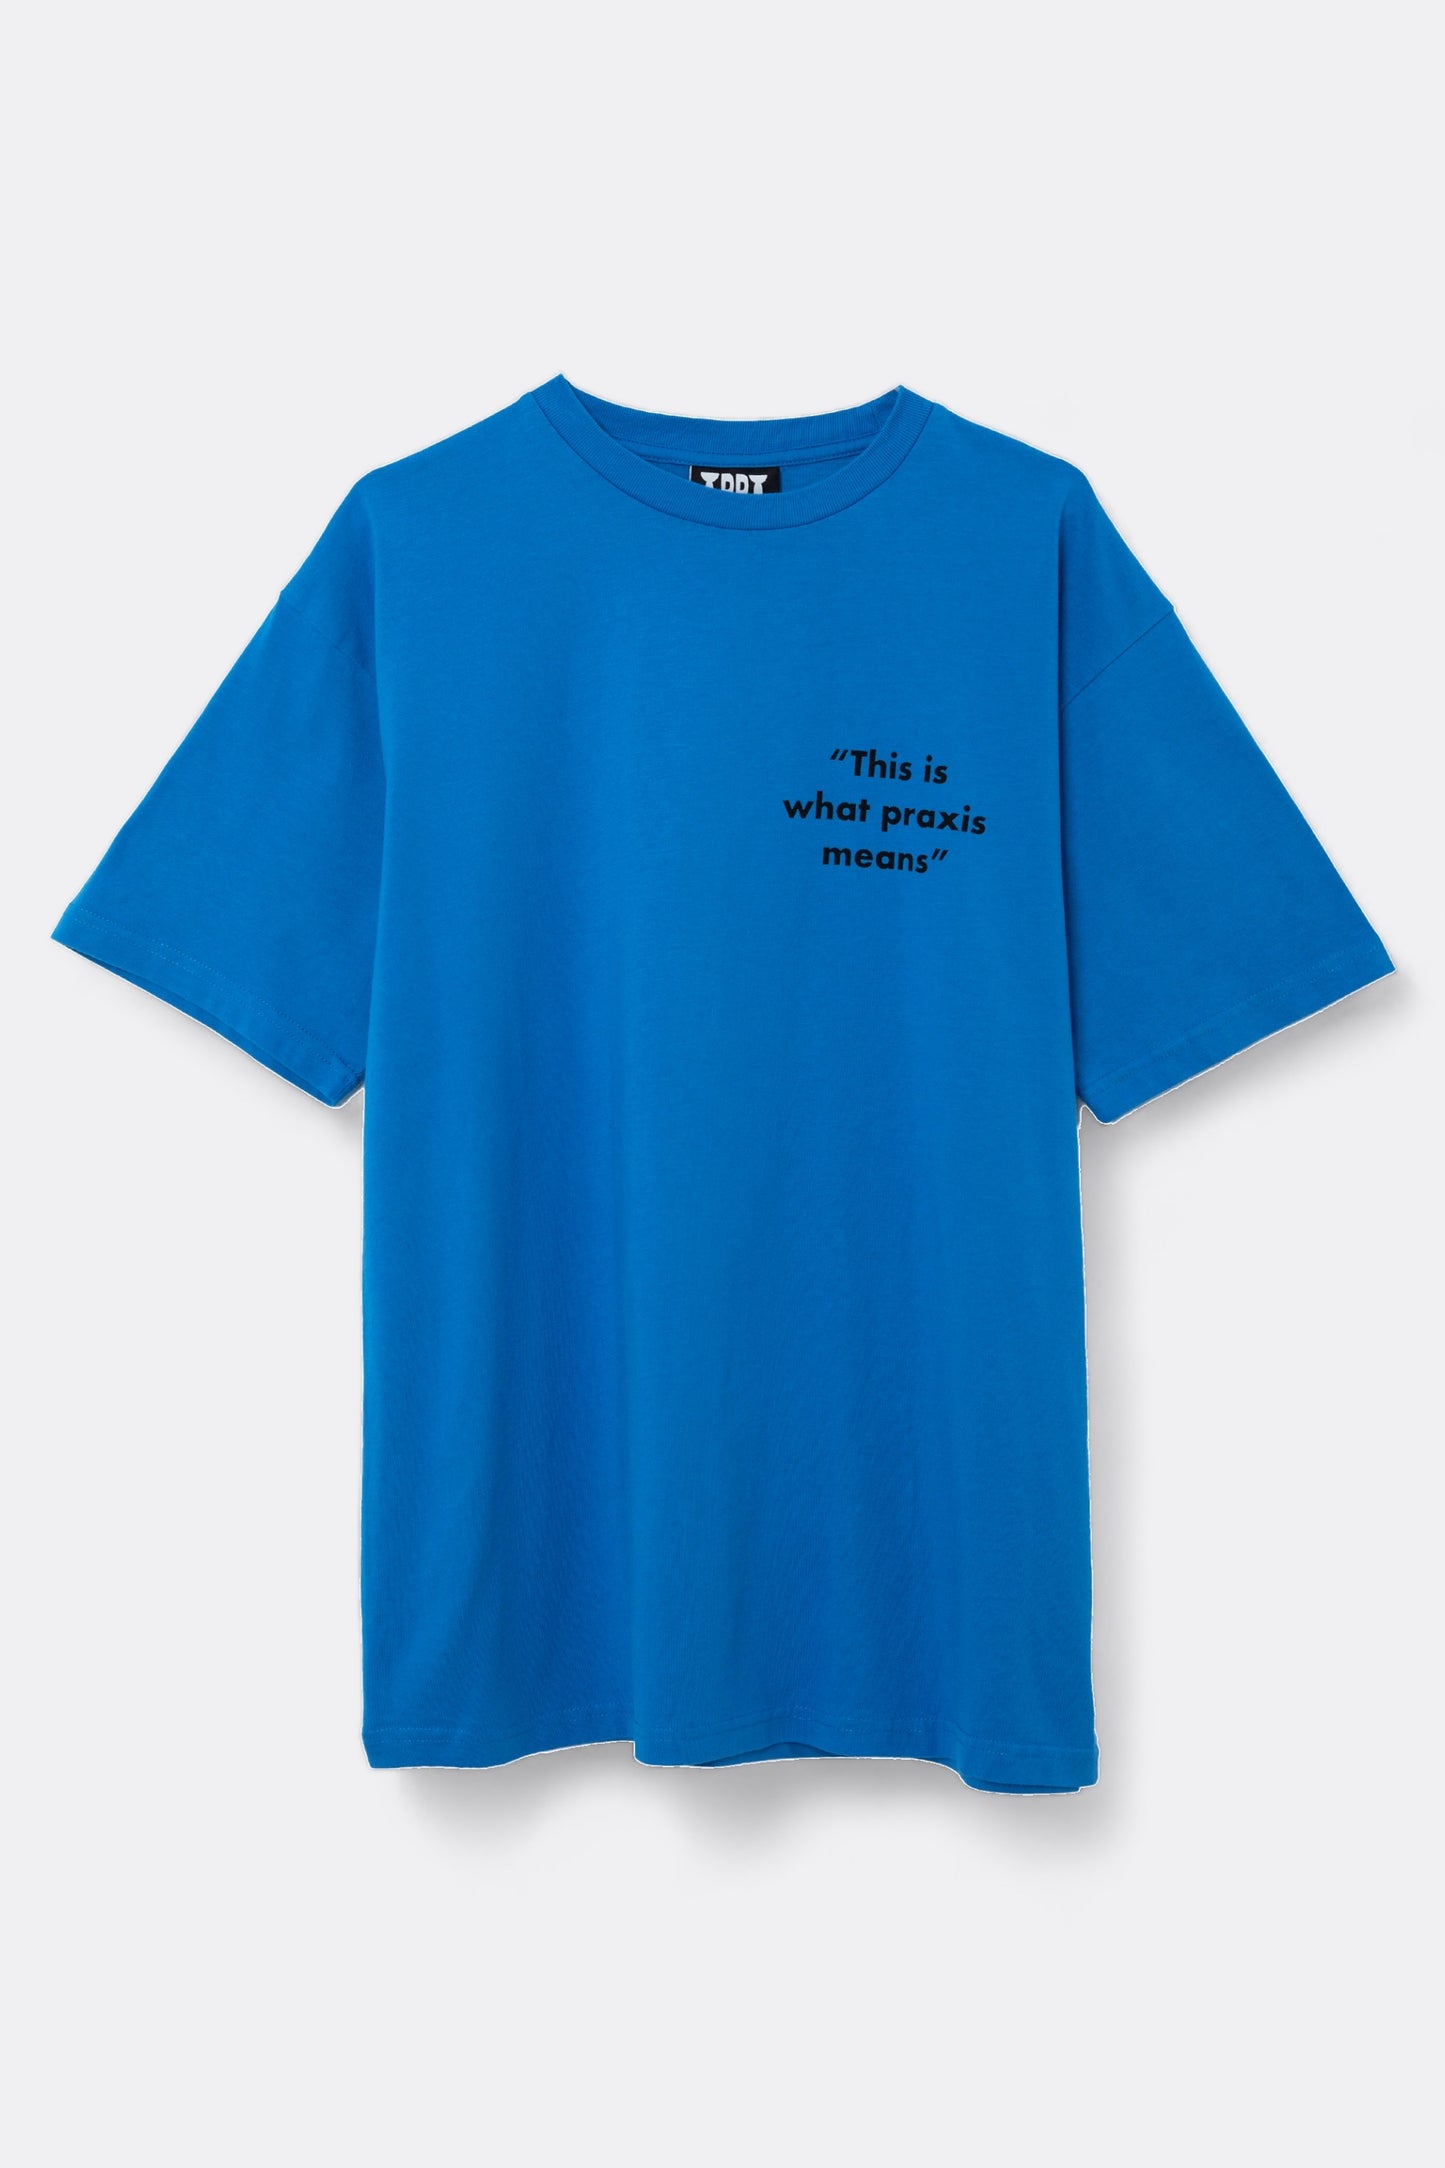 Public Possession - Praxis/Theorie T-Shirt (Cute Blue)